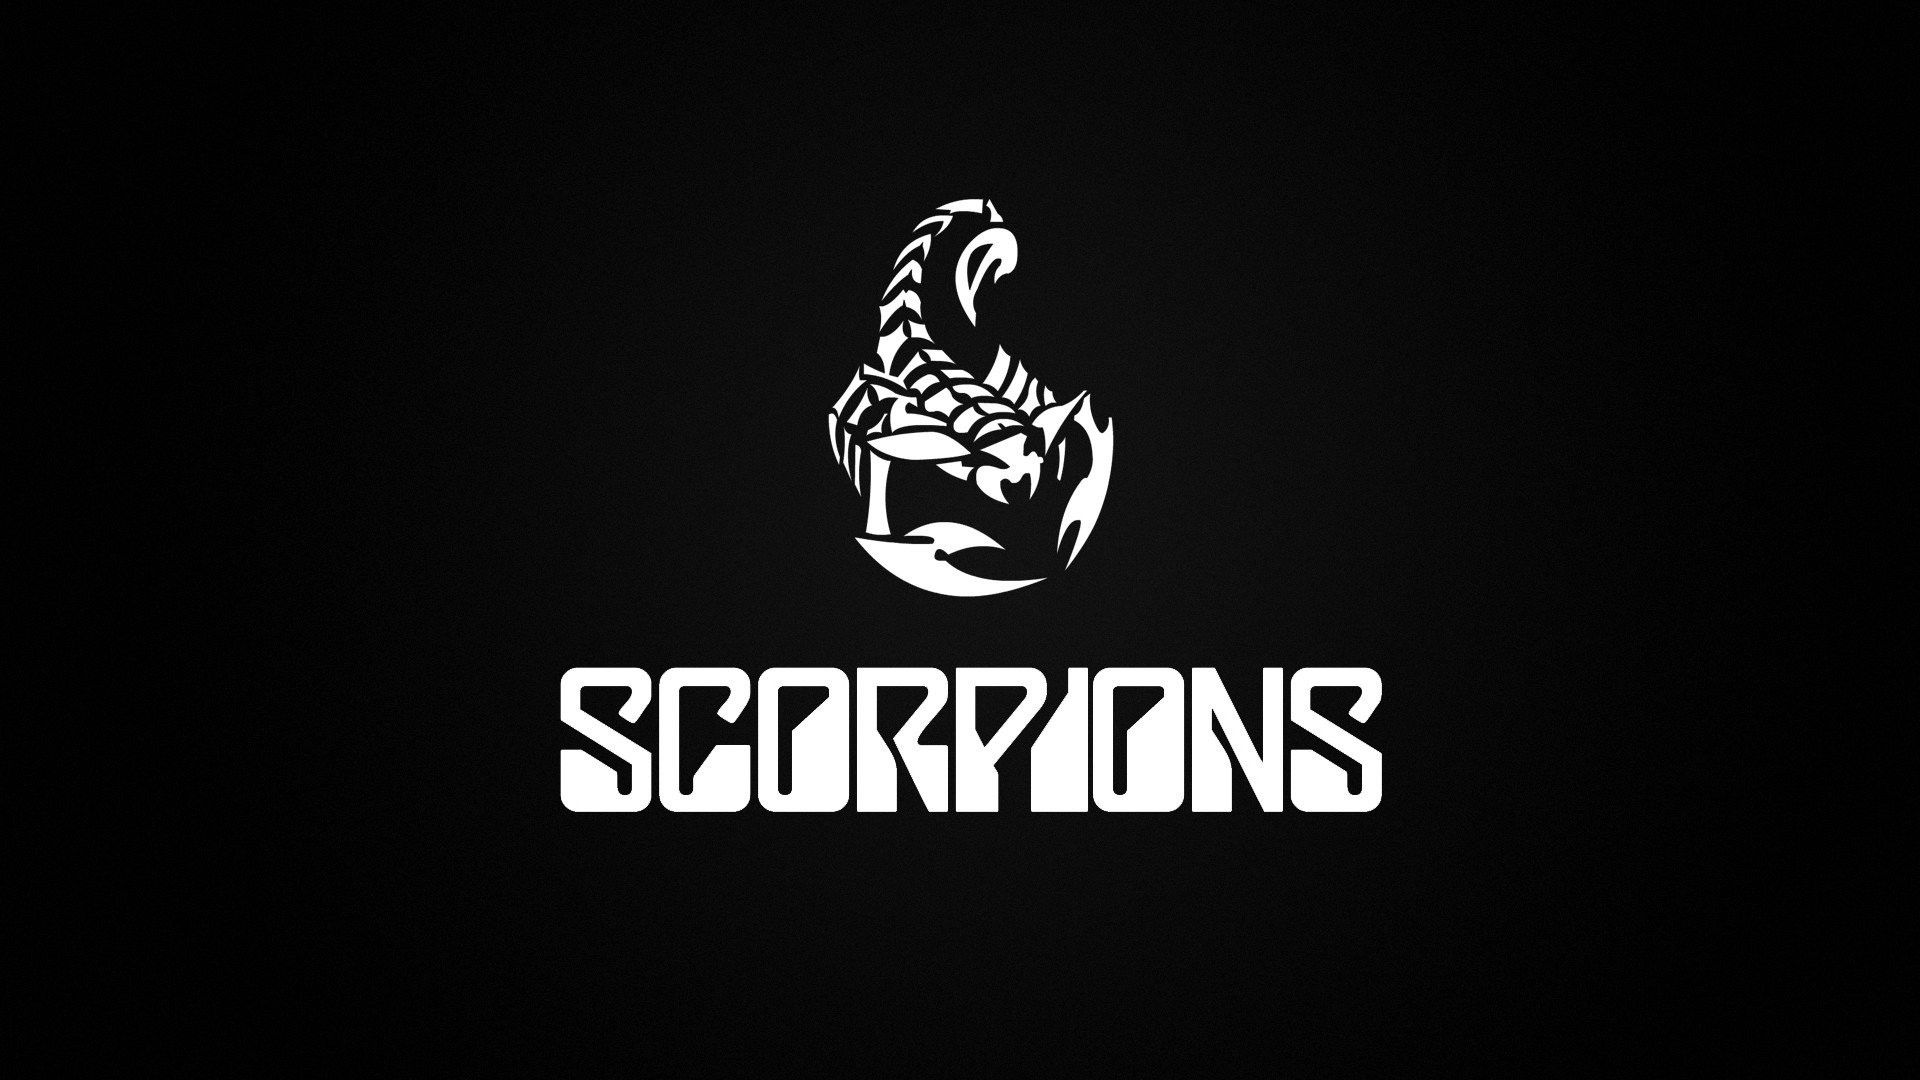 Scorpions Wallpaper Free Scorpions Background